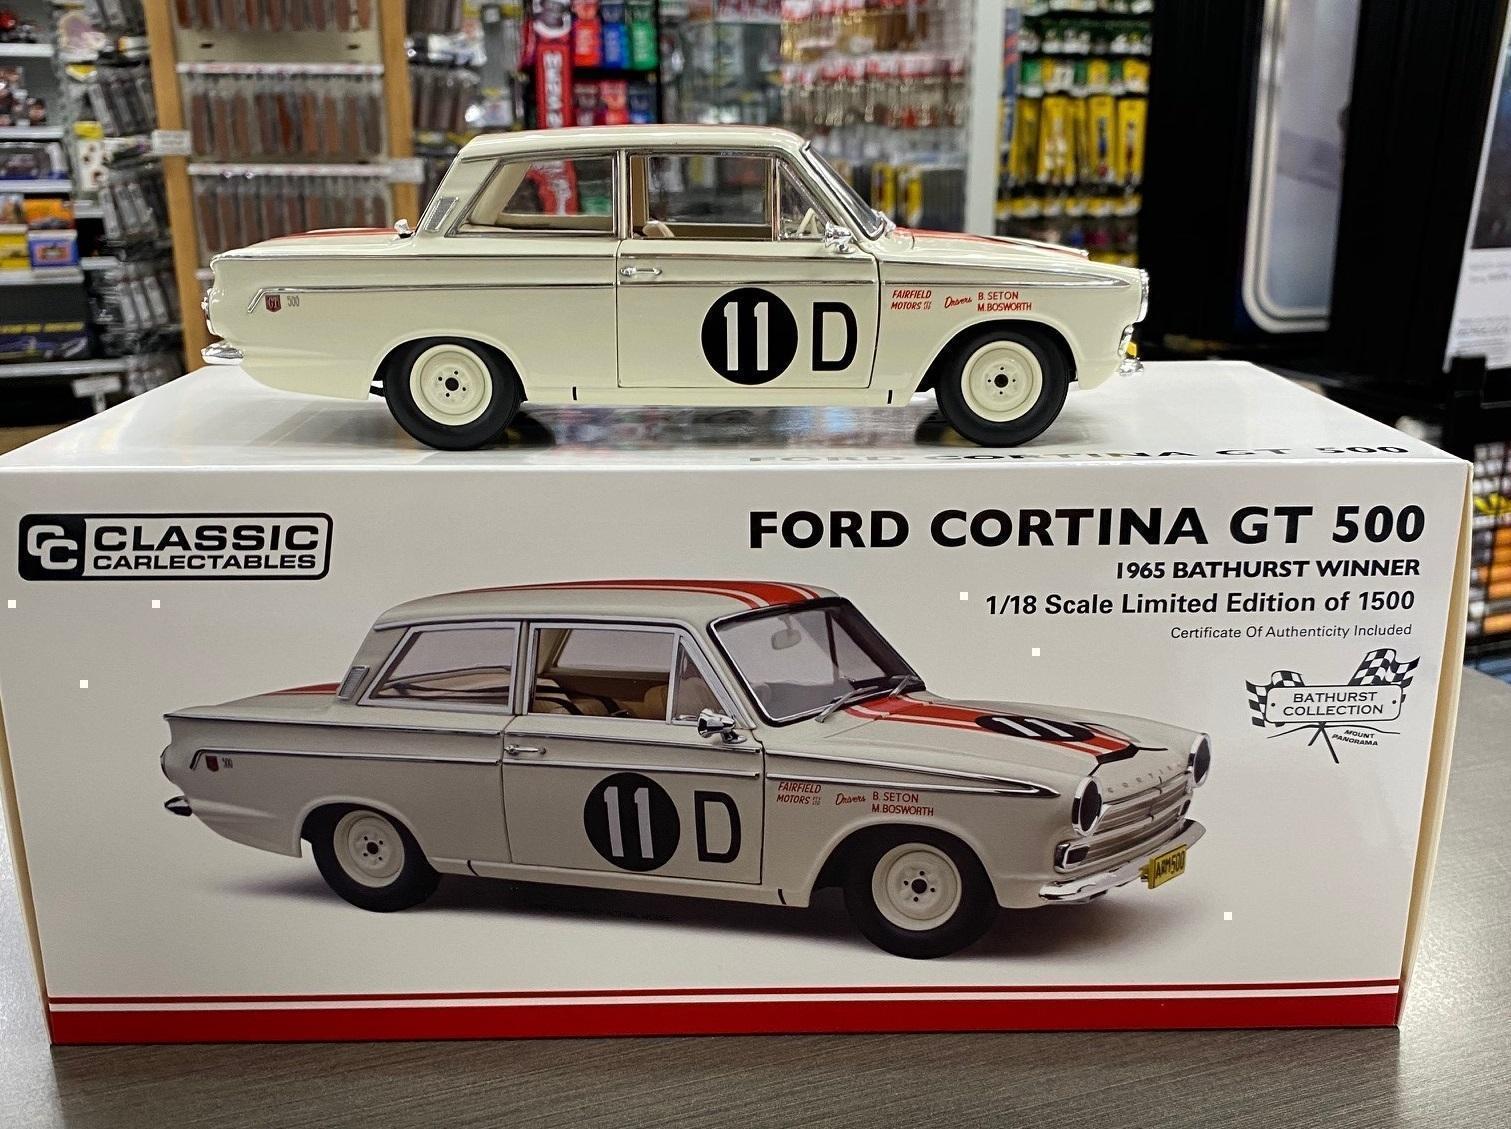 1965 Bathurst Winner Ford Cortina GT 500